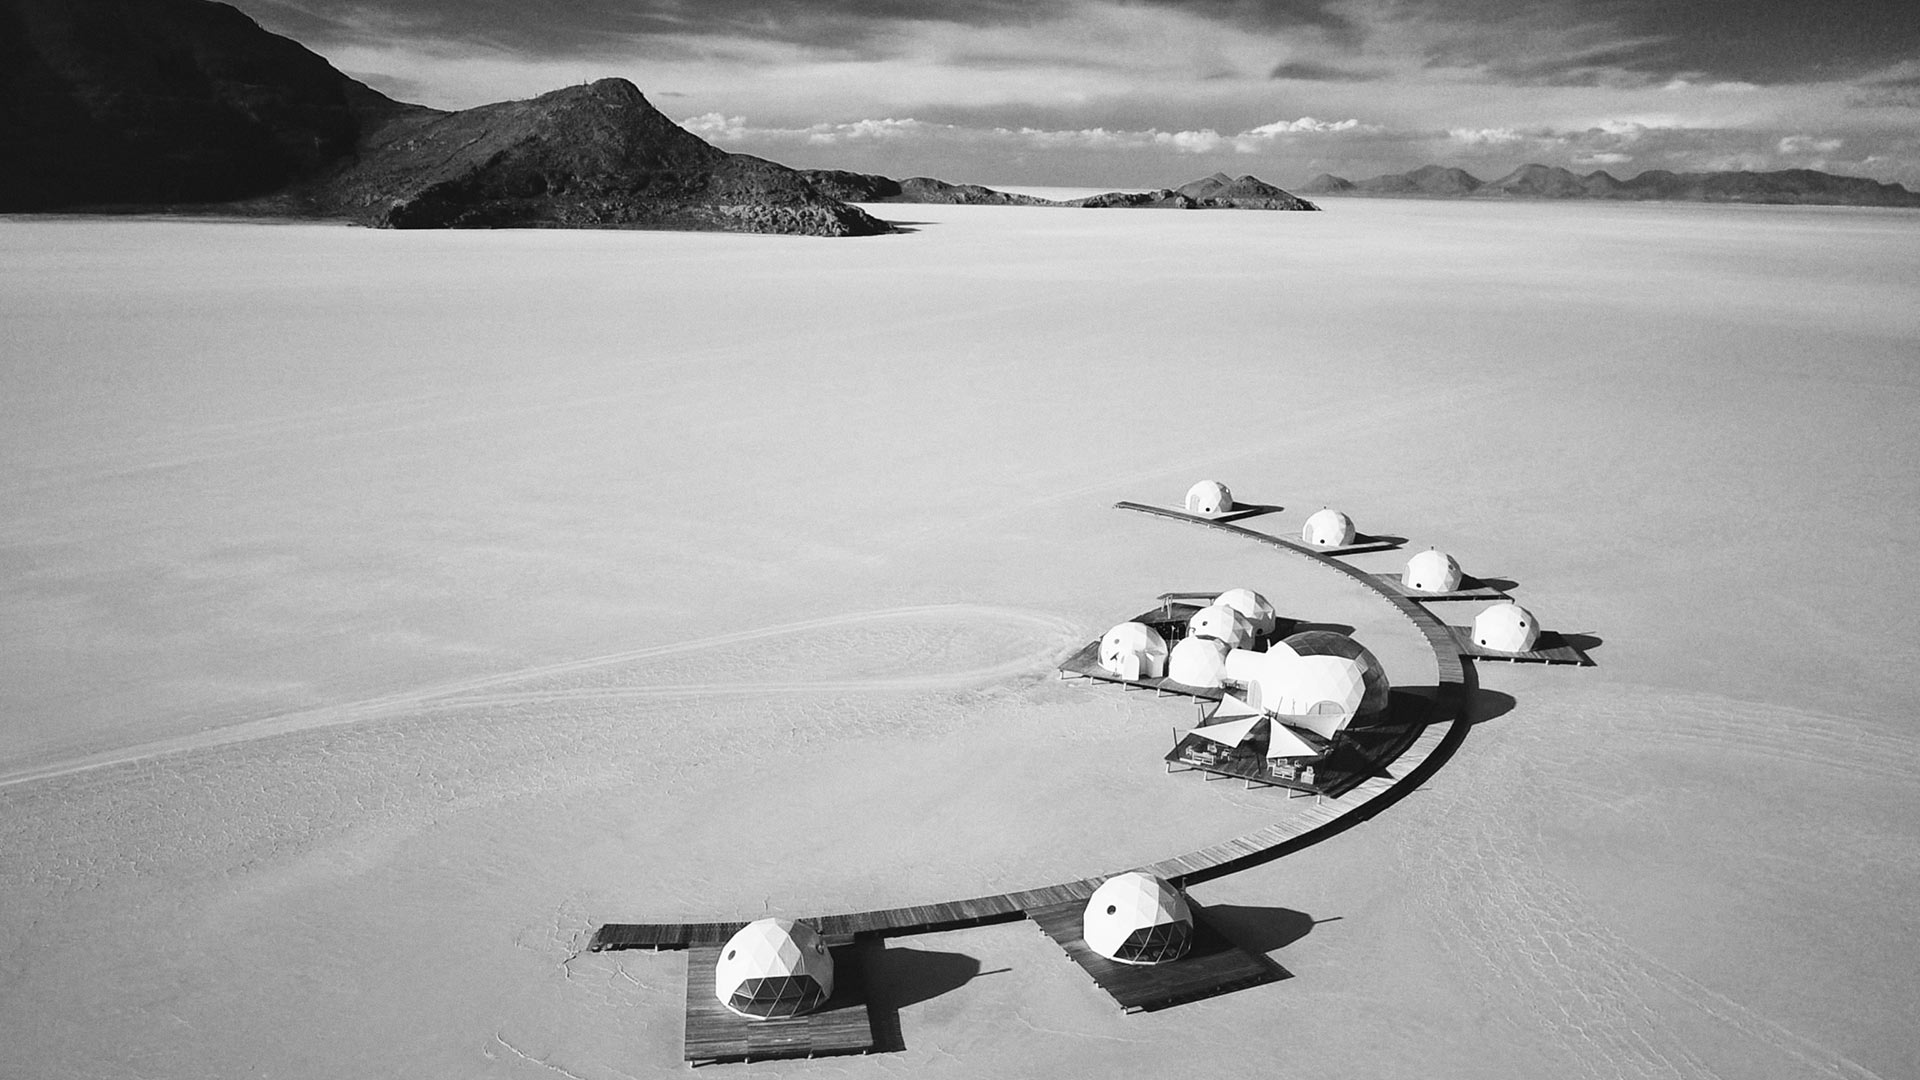 Kachi Lodge: Uyuni salt flats in Bolivia